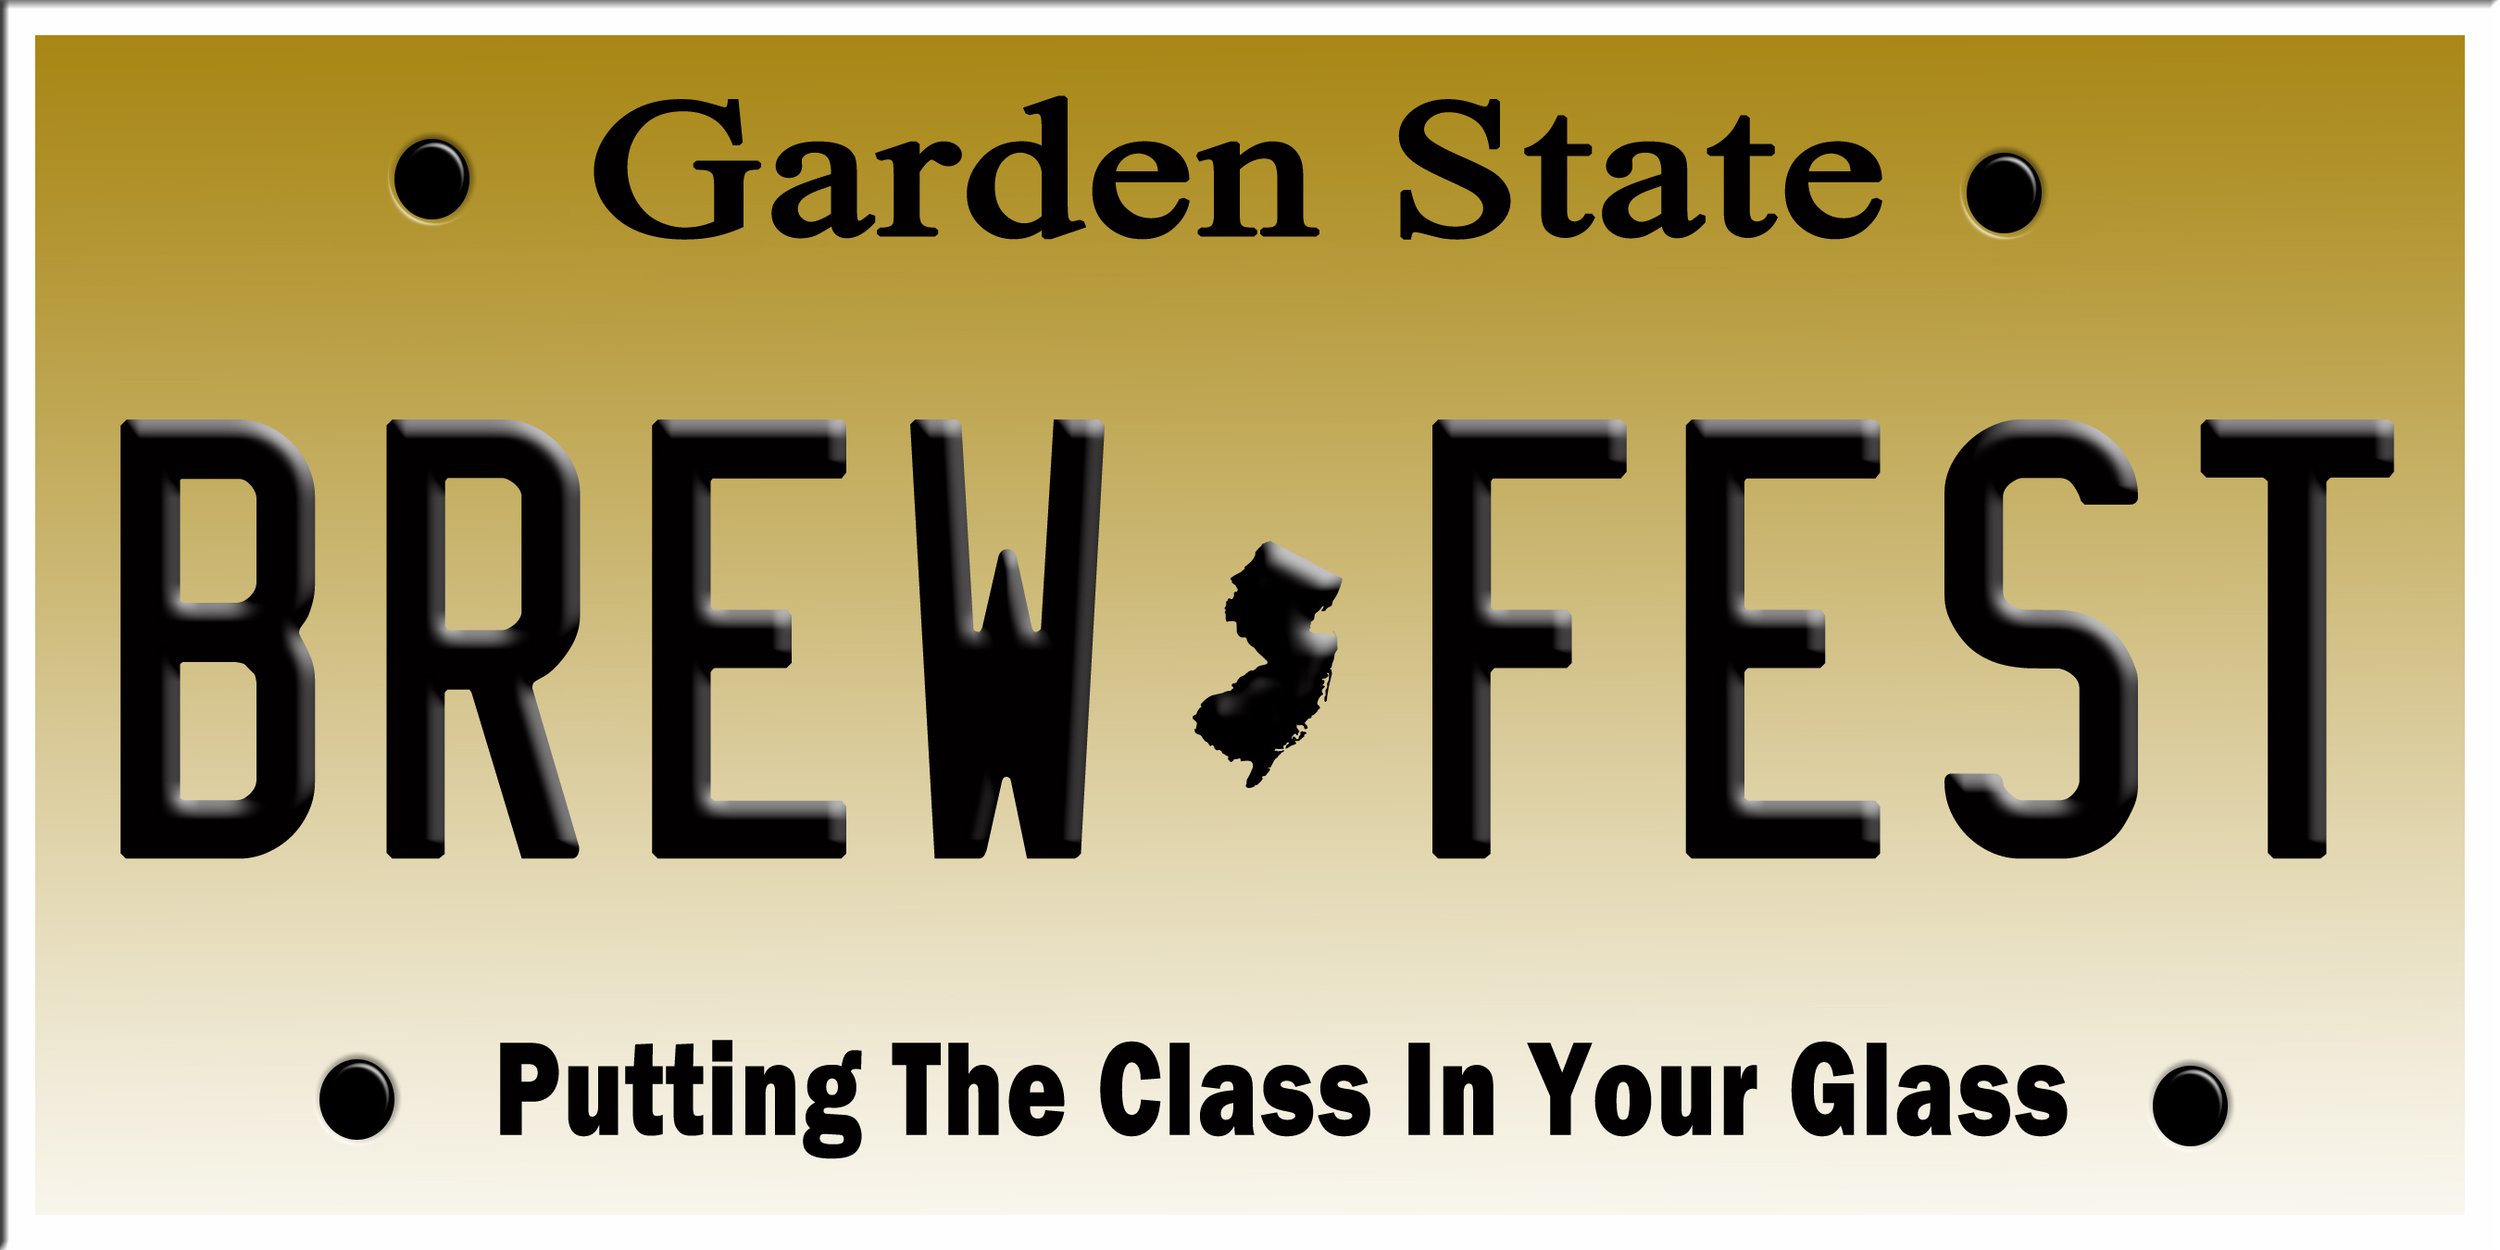 Garden-State-Beerfest-Logo-Mockup-2.jpg